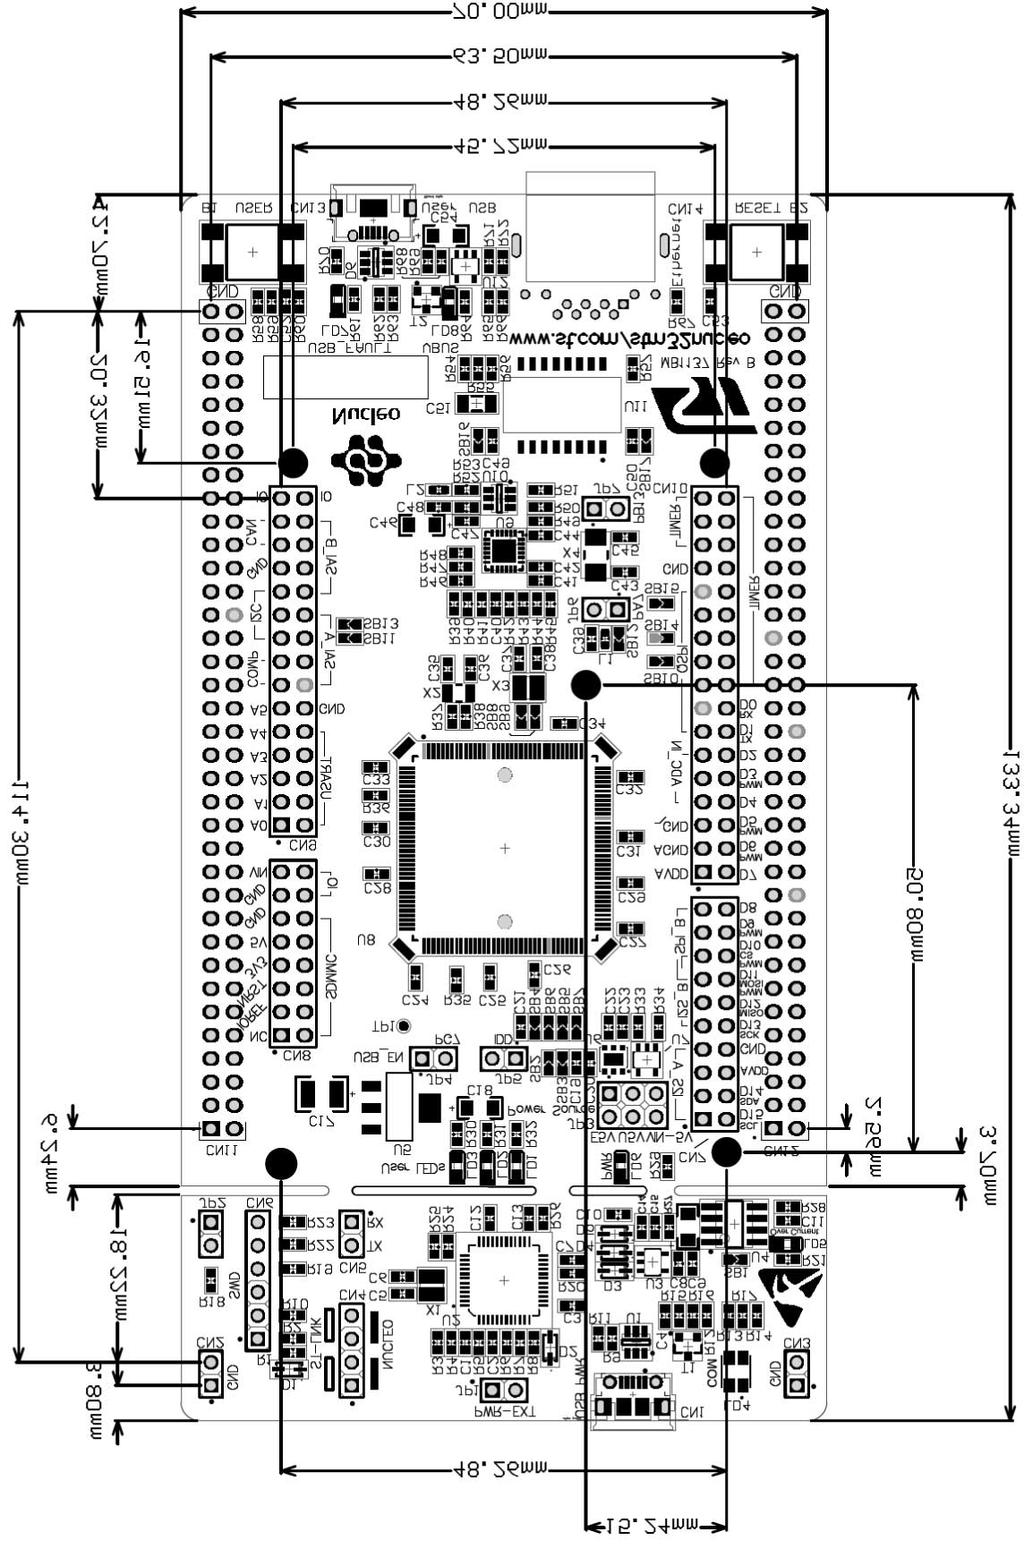 UM1974 Hardware layout and configuration 6.1 Mechanical drawing Figure 6.